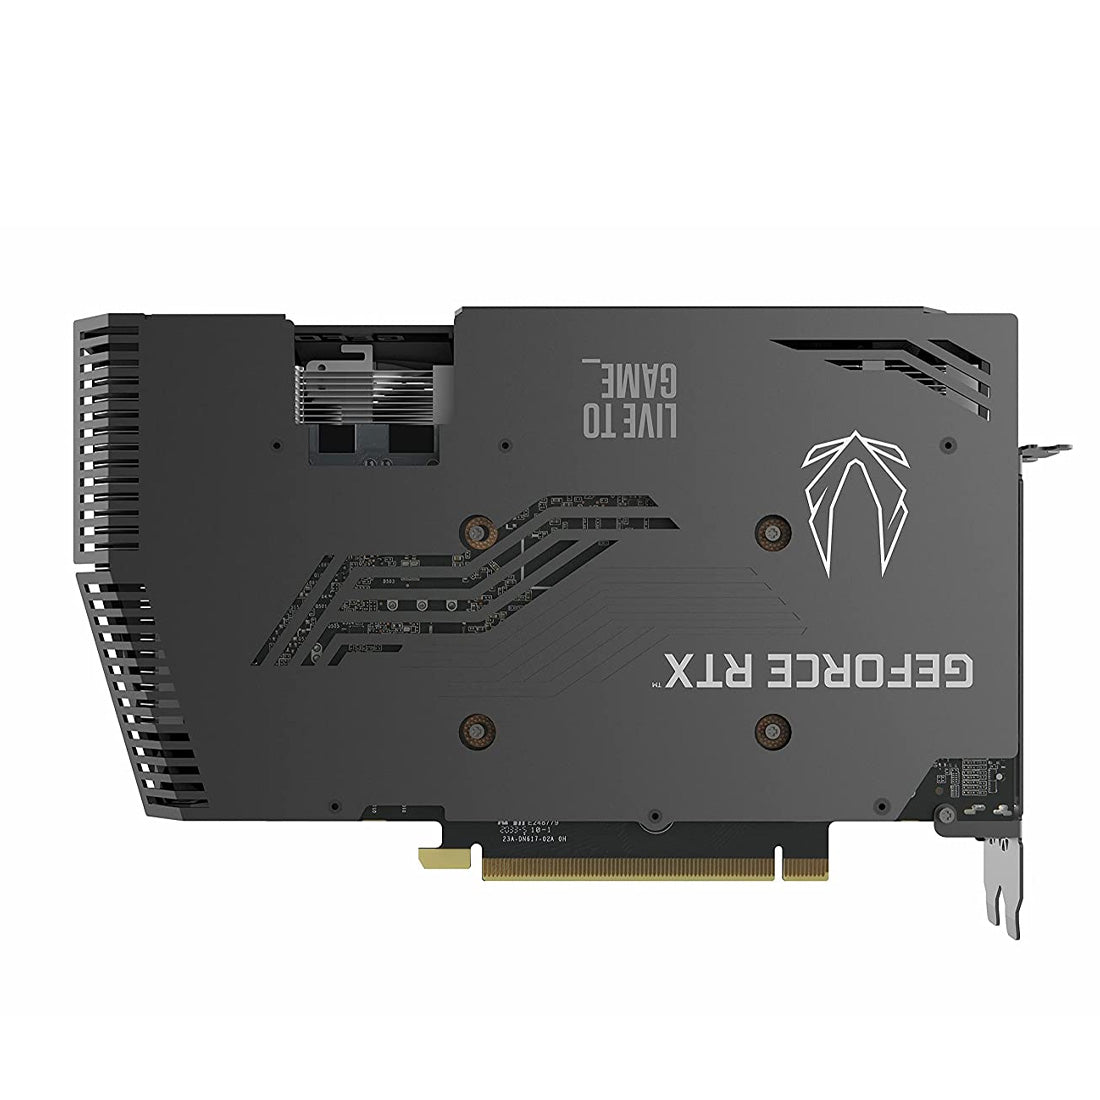 Zotac GeForce RTX 3070 Twin Edge LHR 8GB GDDR6 256-Bit Graphics Card